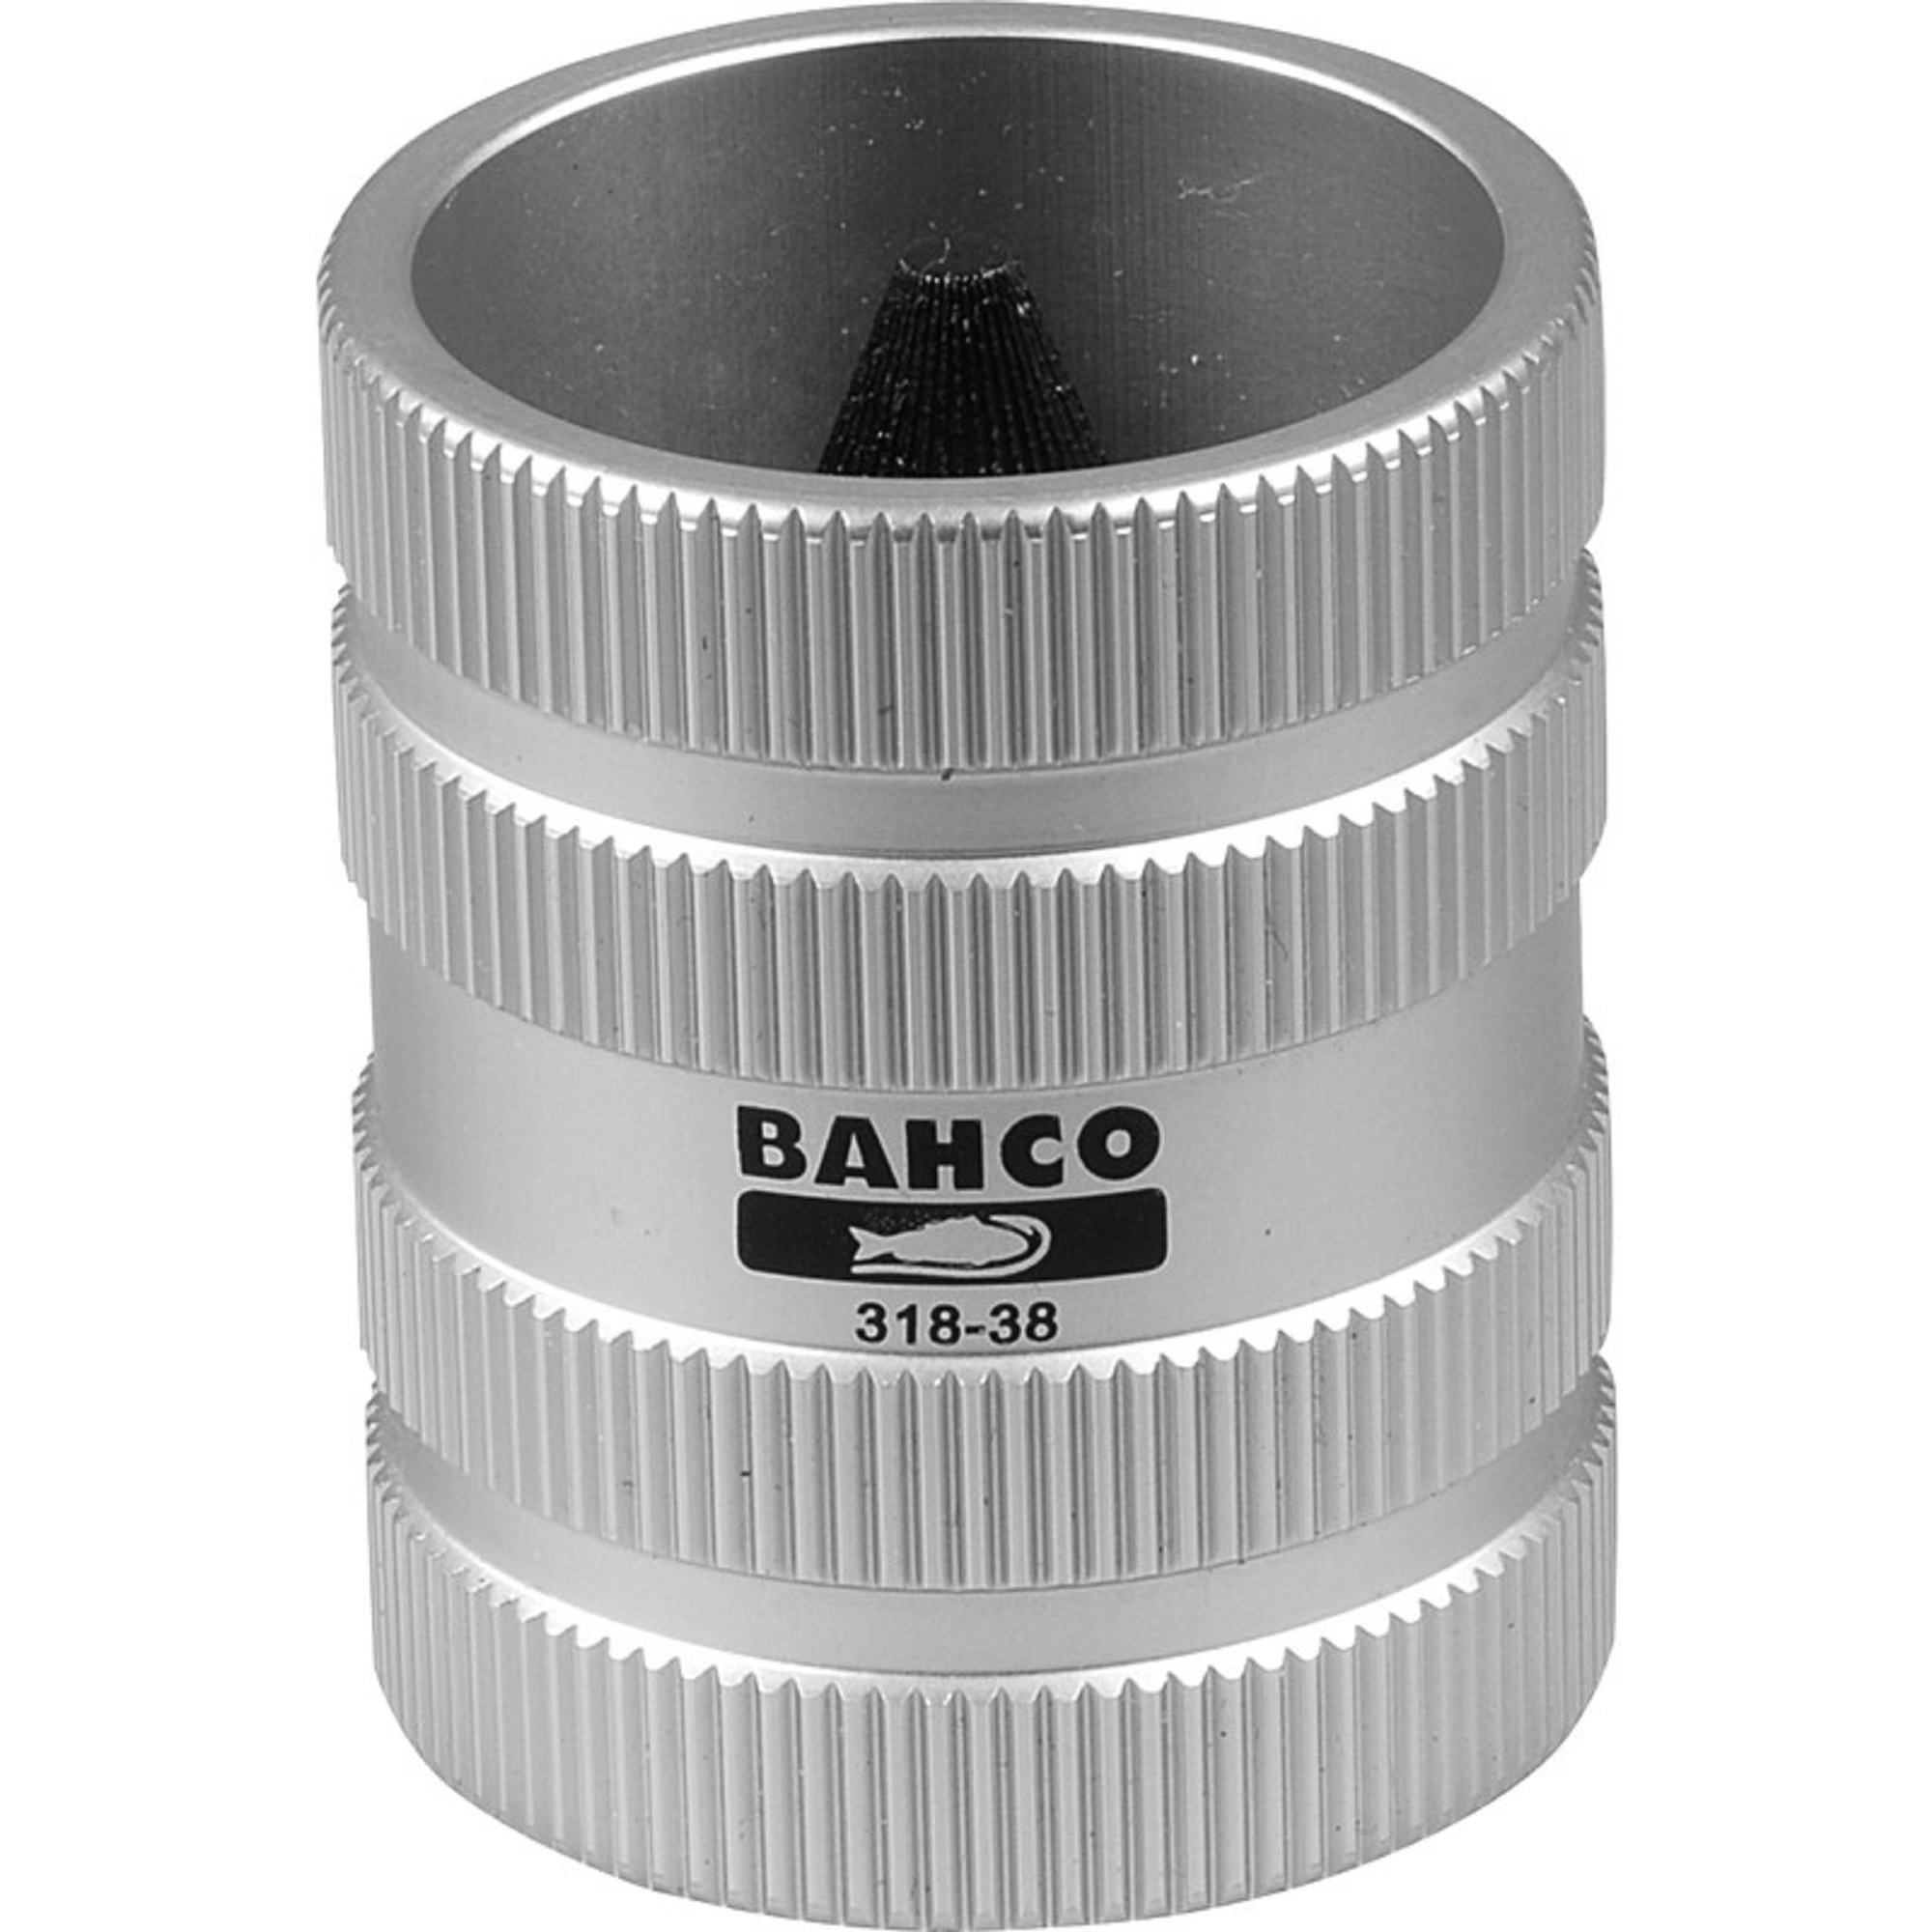 Afbramer Bahco 318-38 binnen/buiten aluminium 60mm